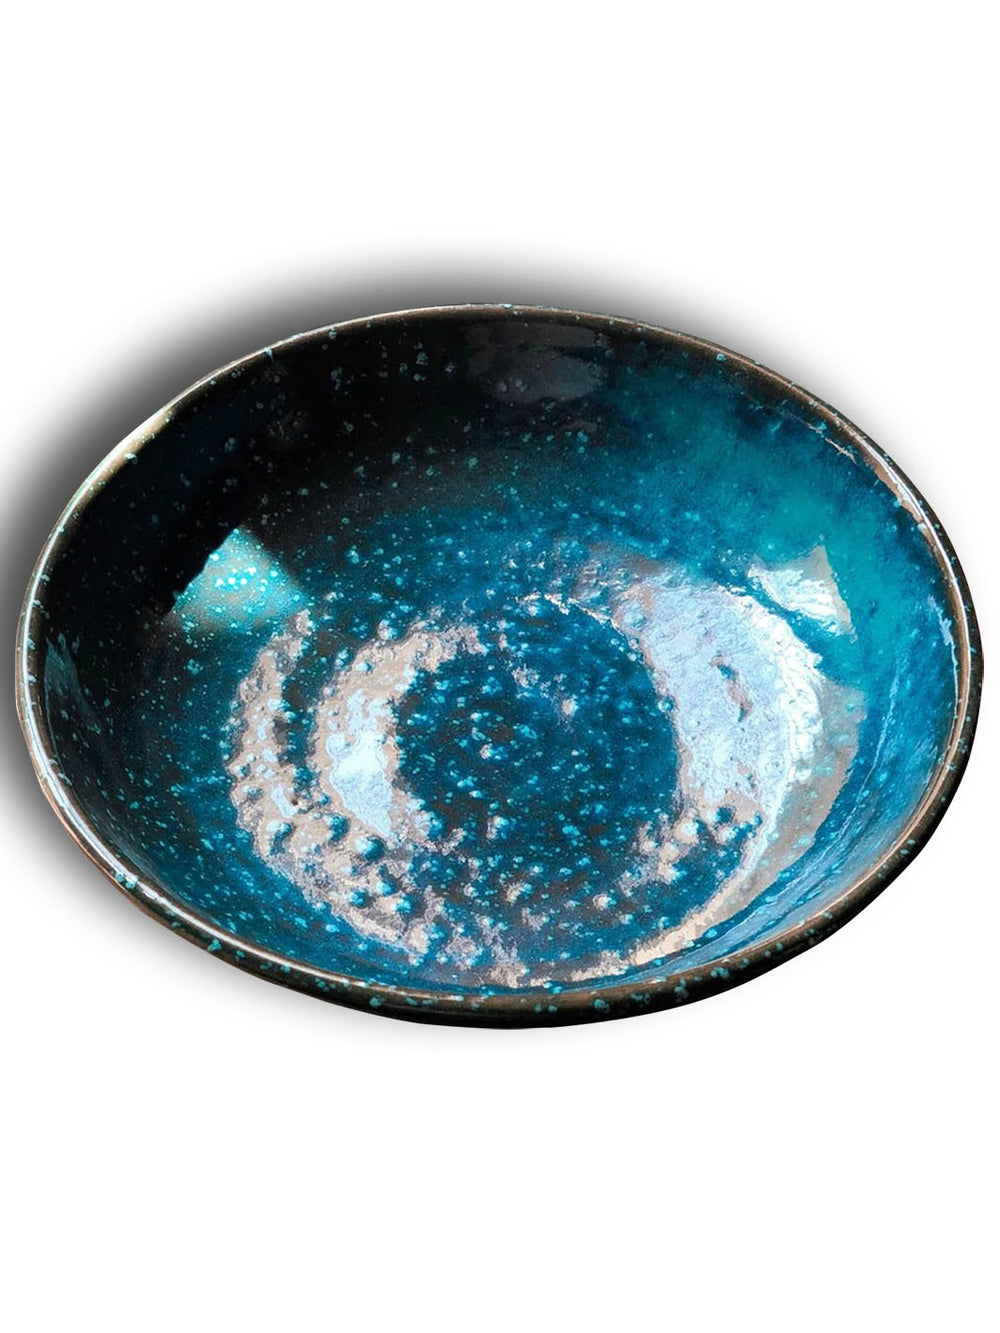 Artistic Handcrafted Ceramic Esmeralda Pasta Bowl Deco Bowls DCB0011-1